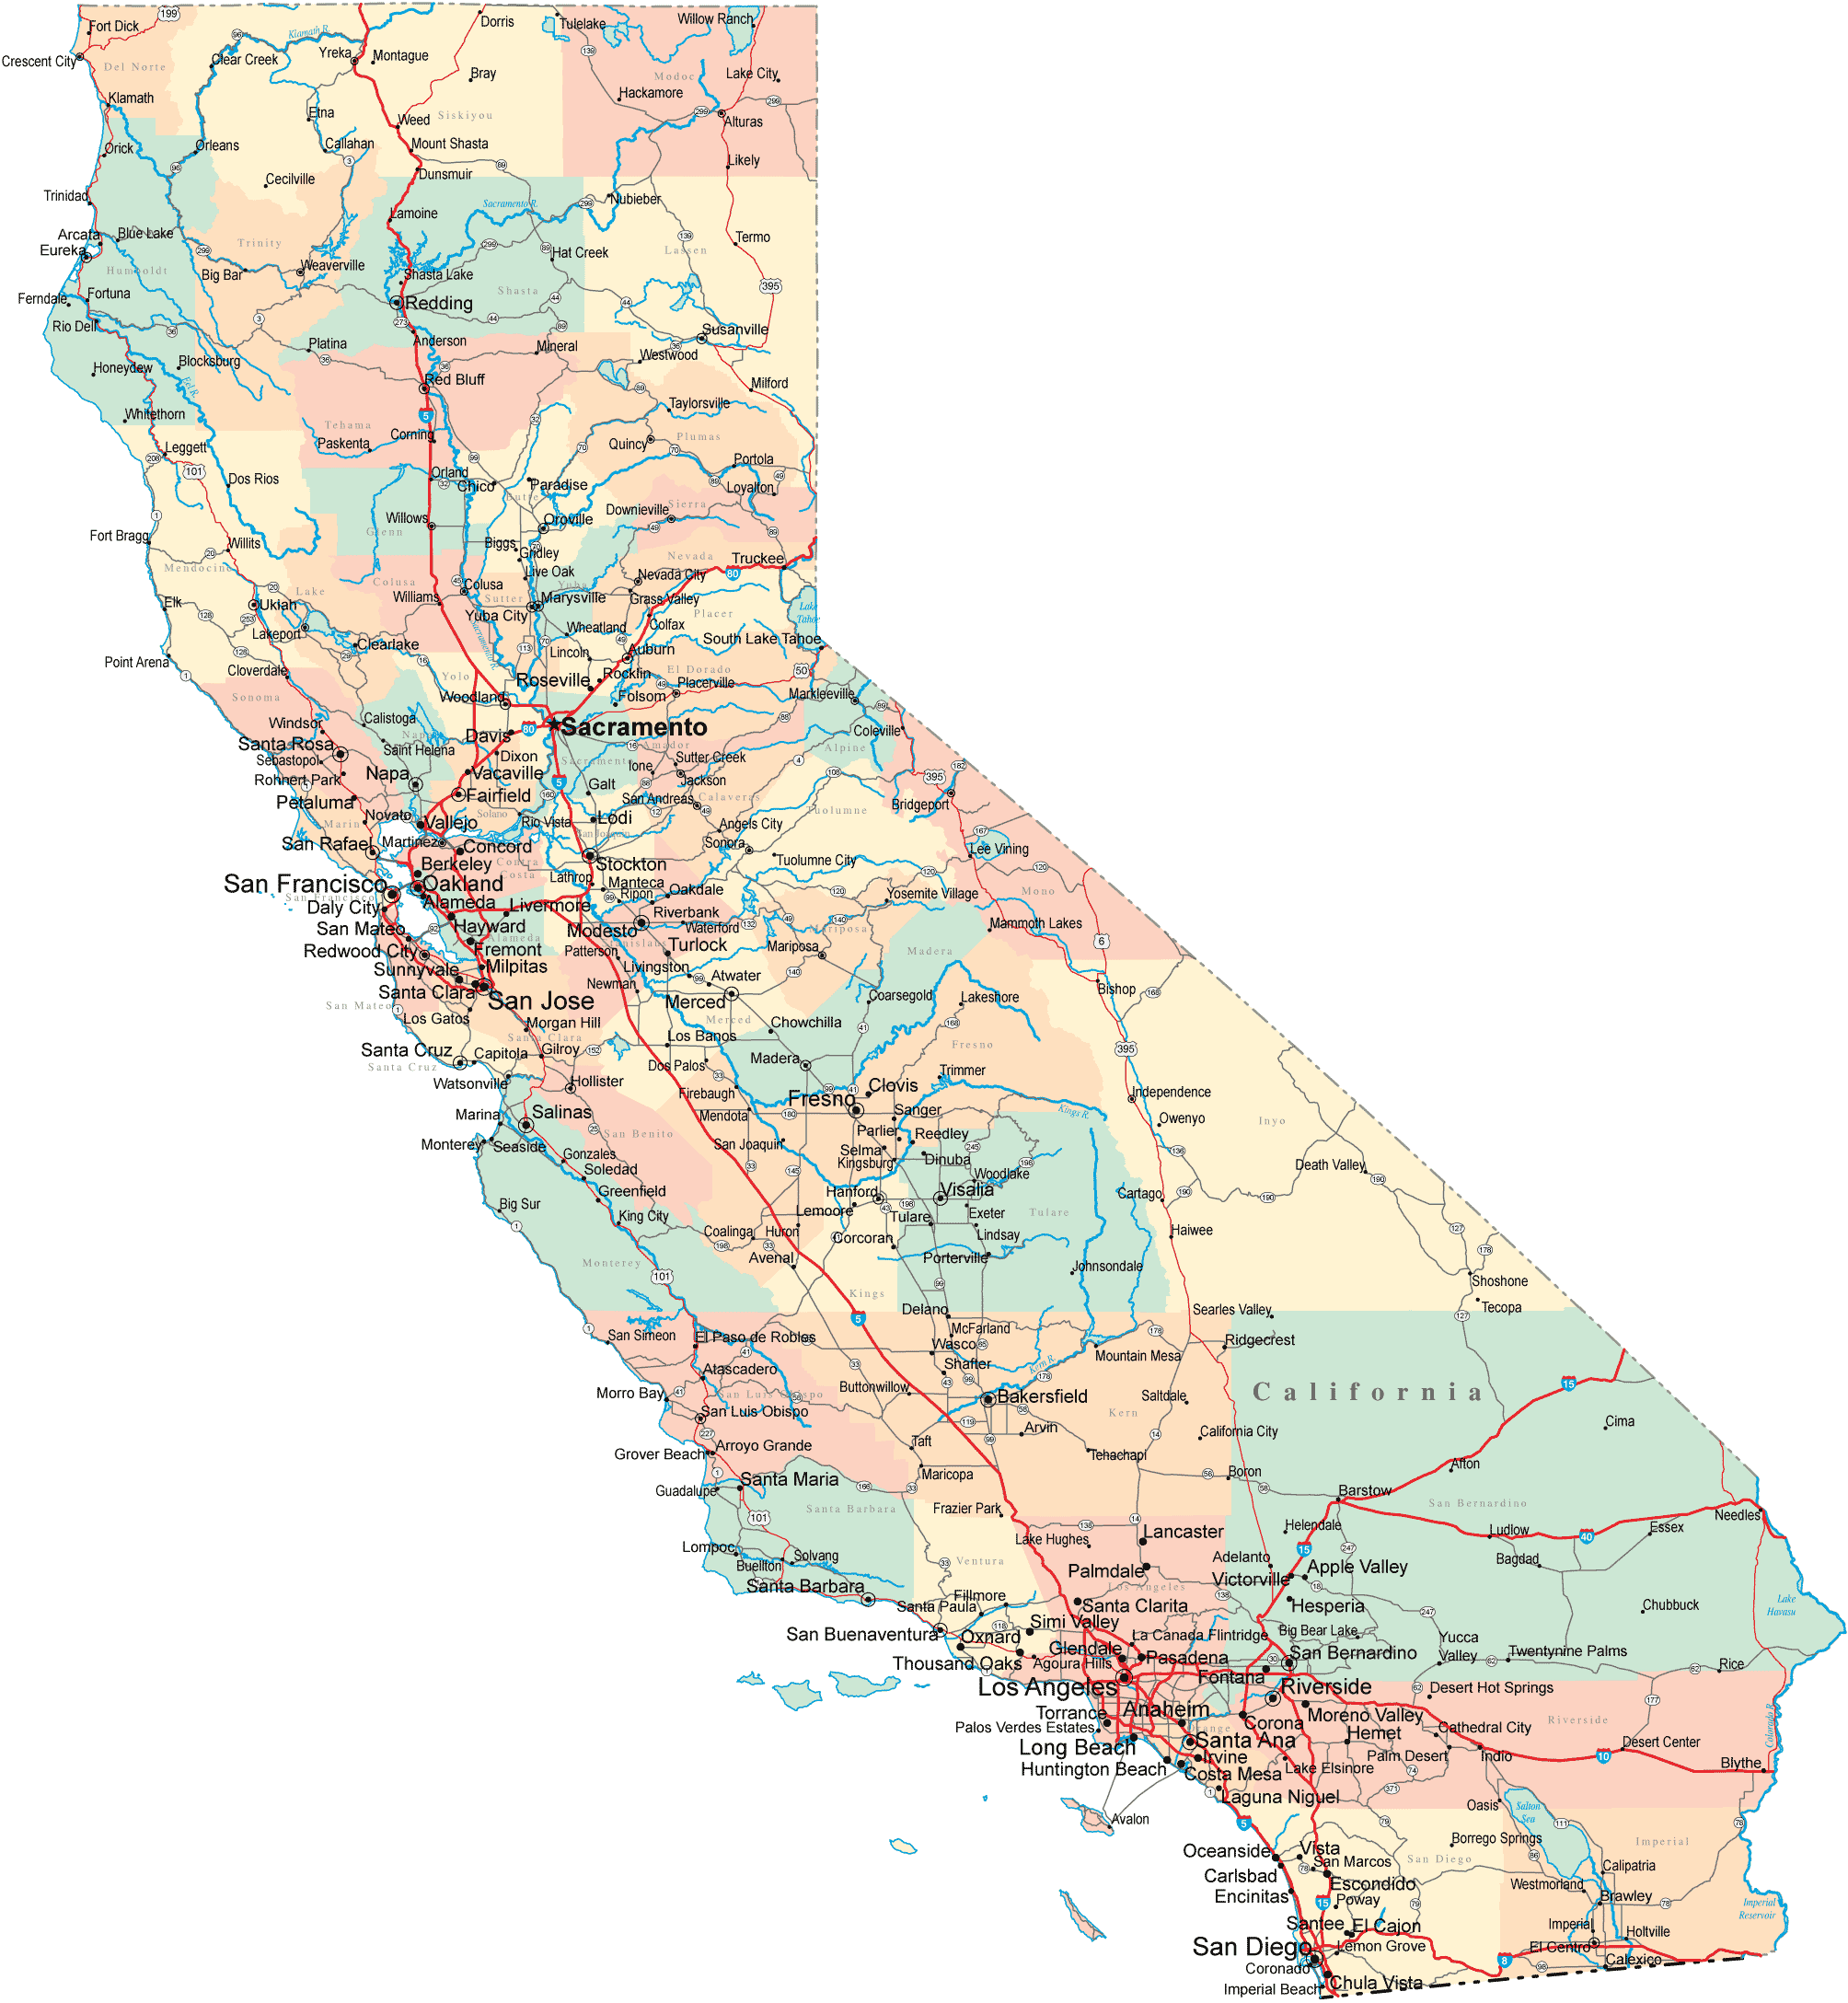 California Zip Code Maps